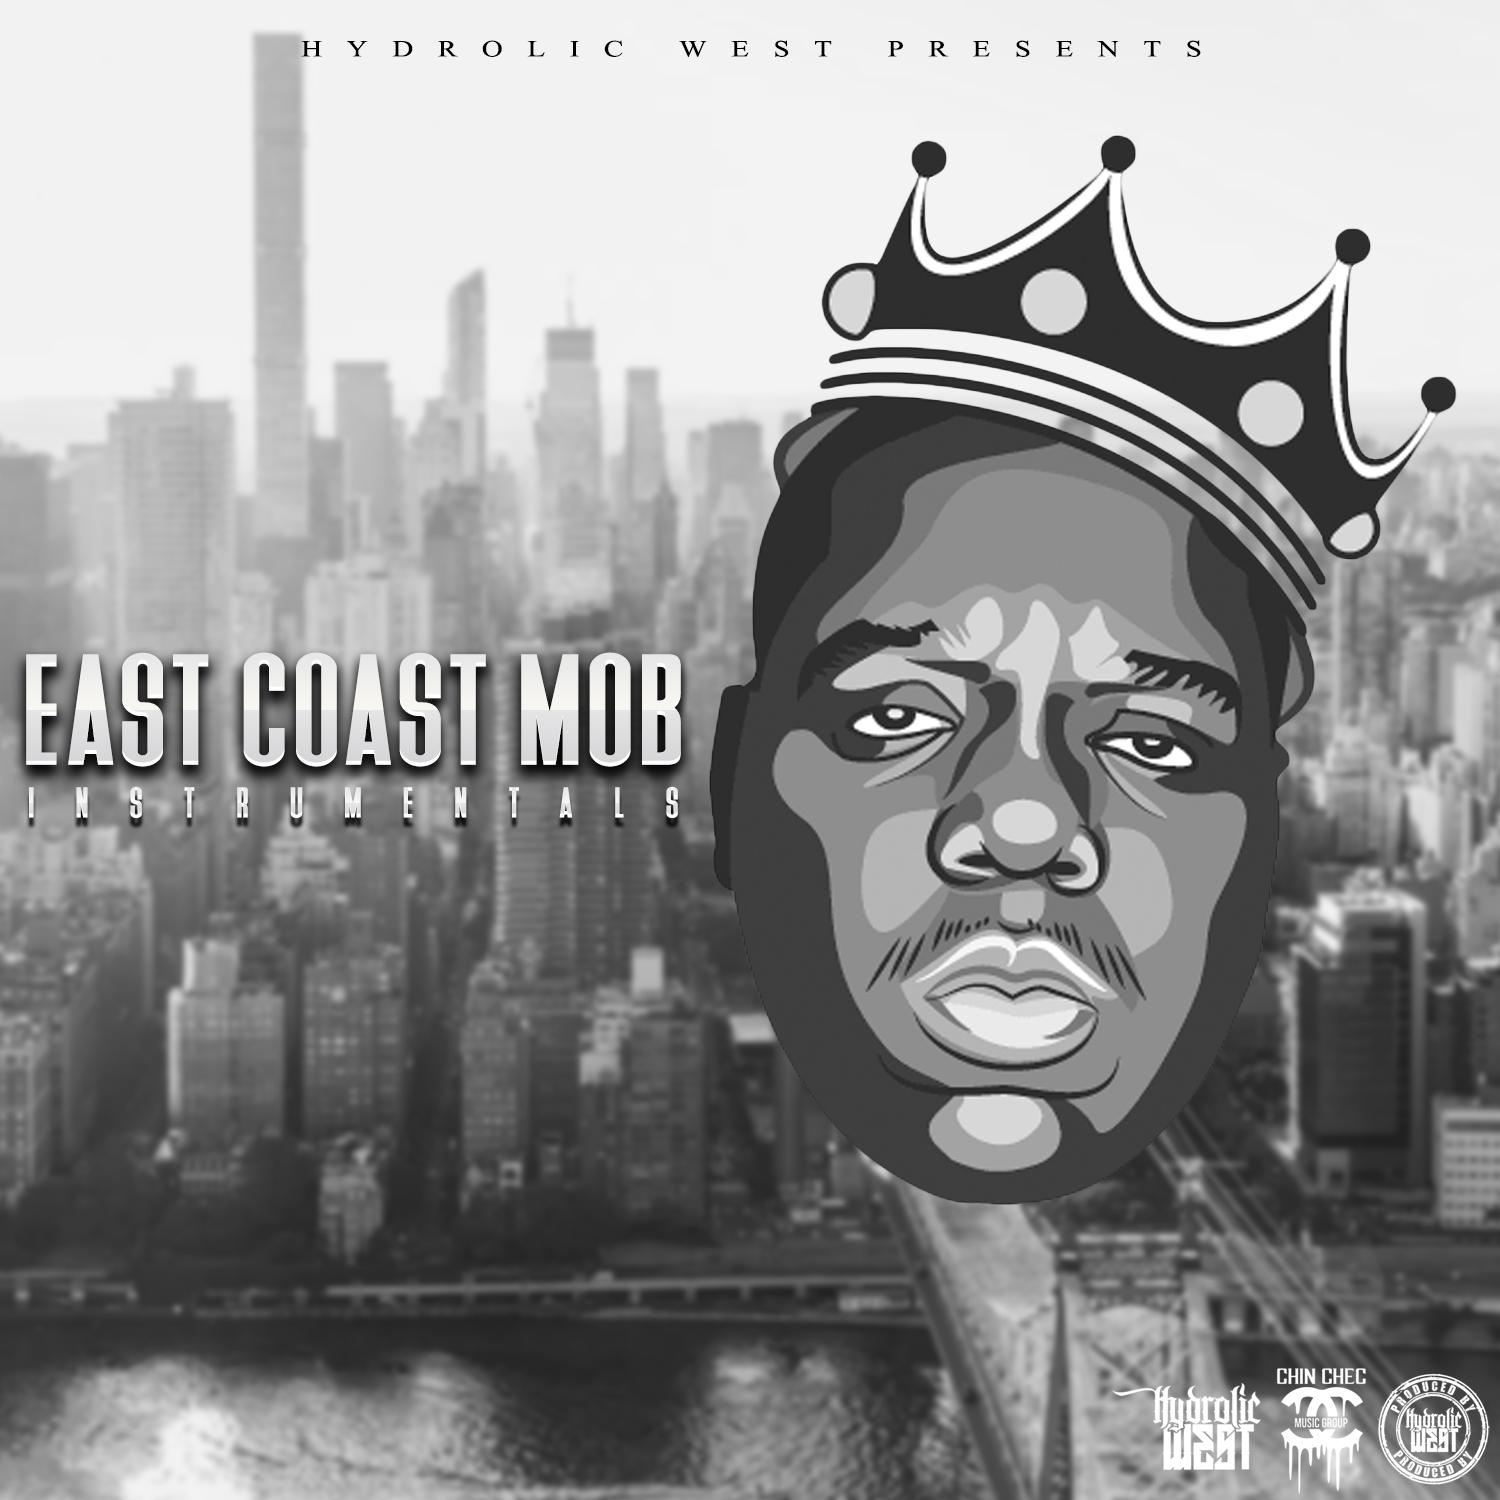 East Coast Rap